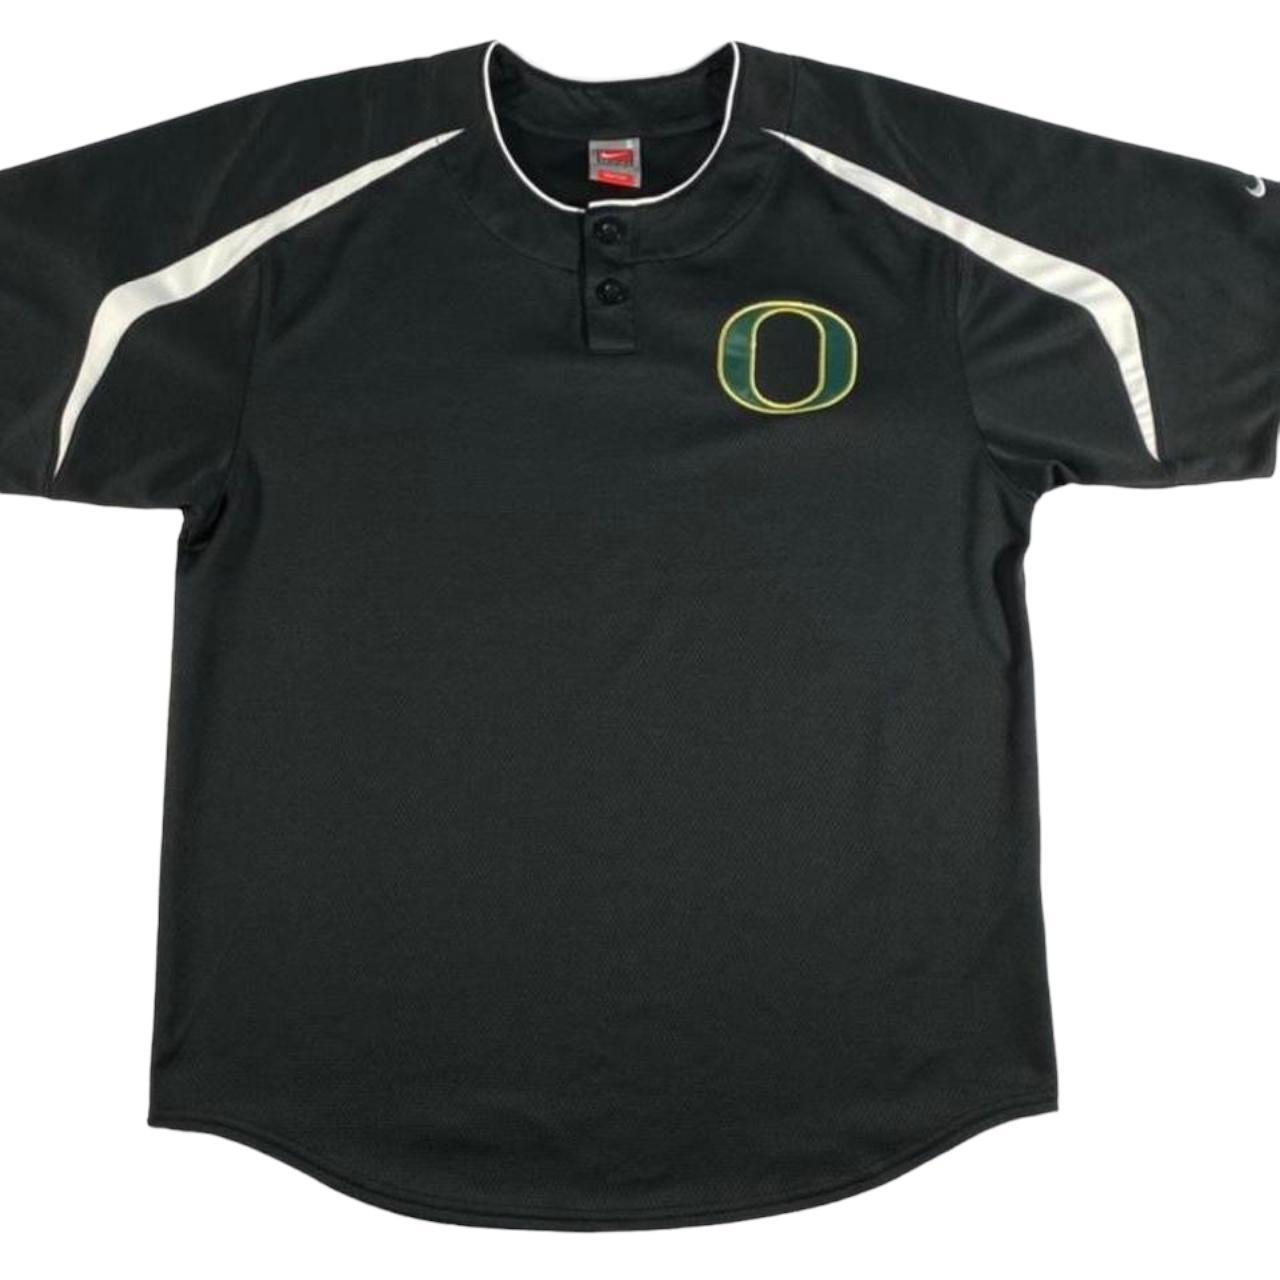 Nike, Shirts, Oregon Ducks Nike Baseball Jersey